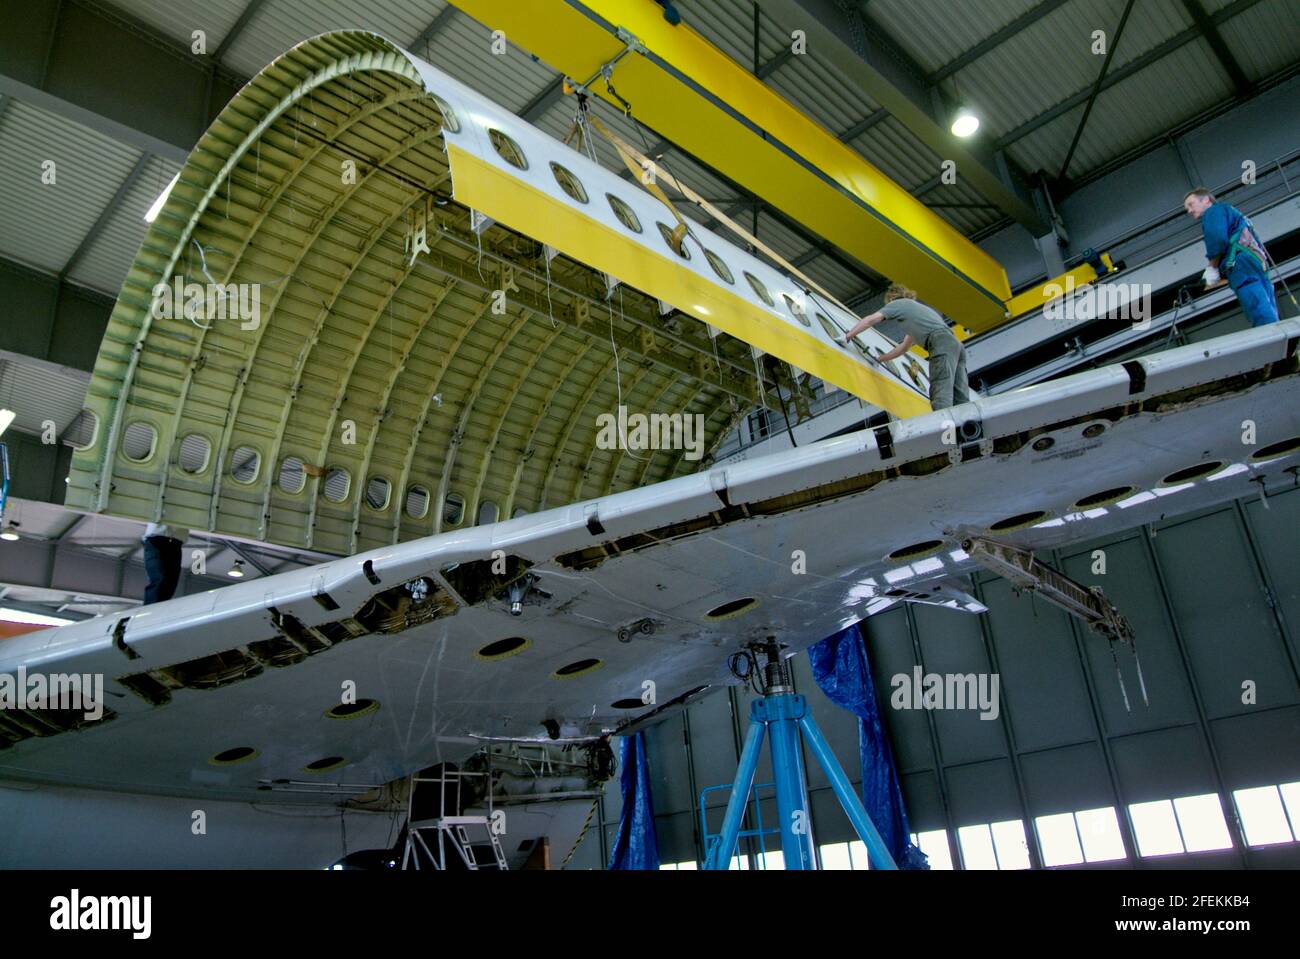 AMS, Air Maintenance Services. Das Unternehmen ams recycelt ein Airbus A300 Flugzeug. Stock Photo